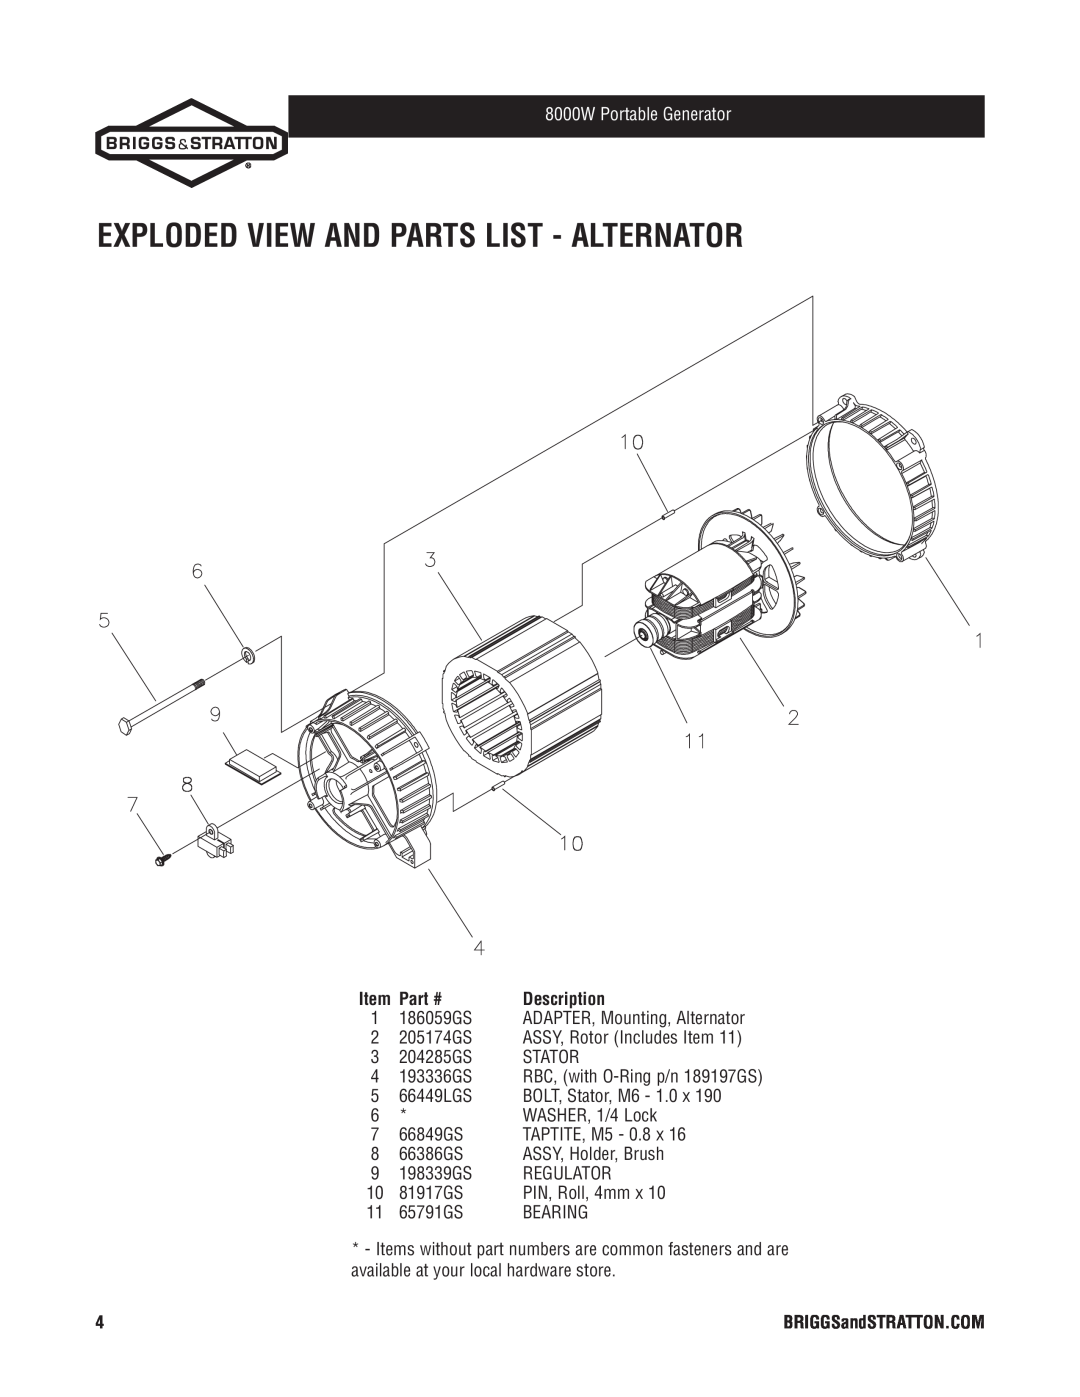 Briggs & Stratton 30334 manual Exploded View And Parts List - Alternator, 186059GS, 8000W Portable Generator, Description 